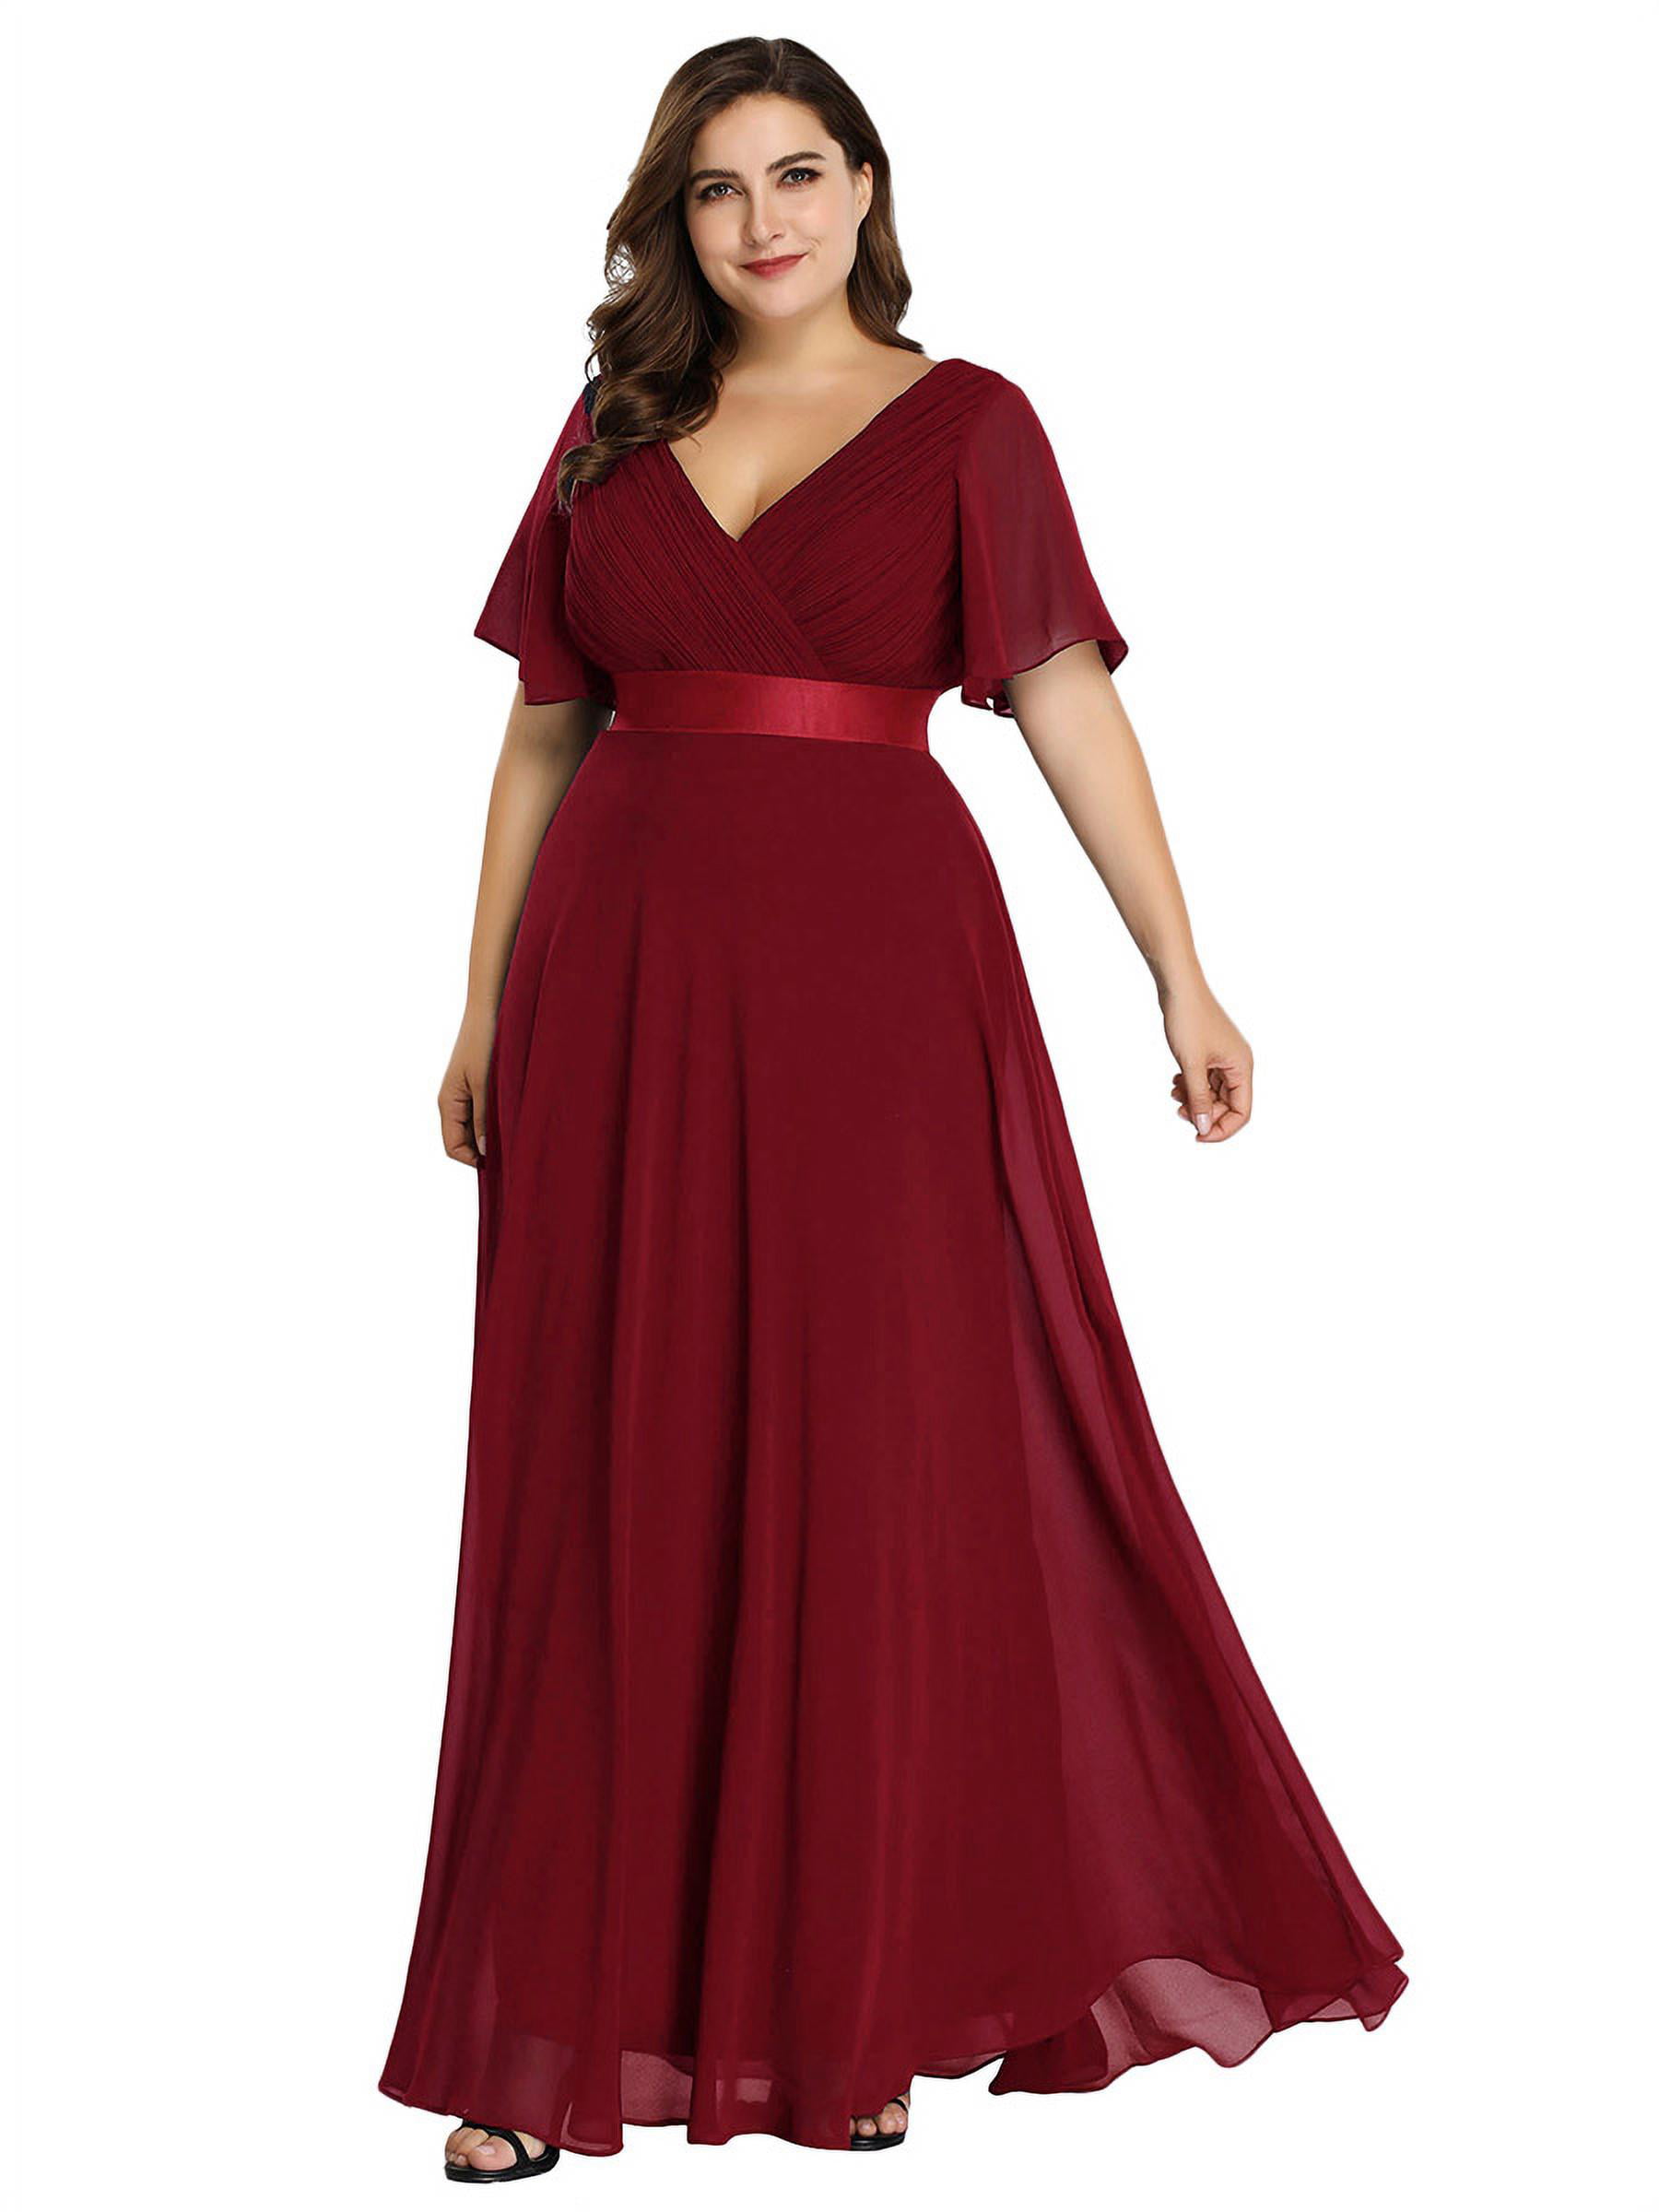 Burgundy Dress for Wedding Plus Size